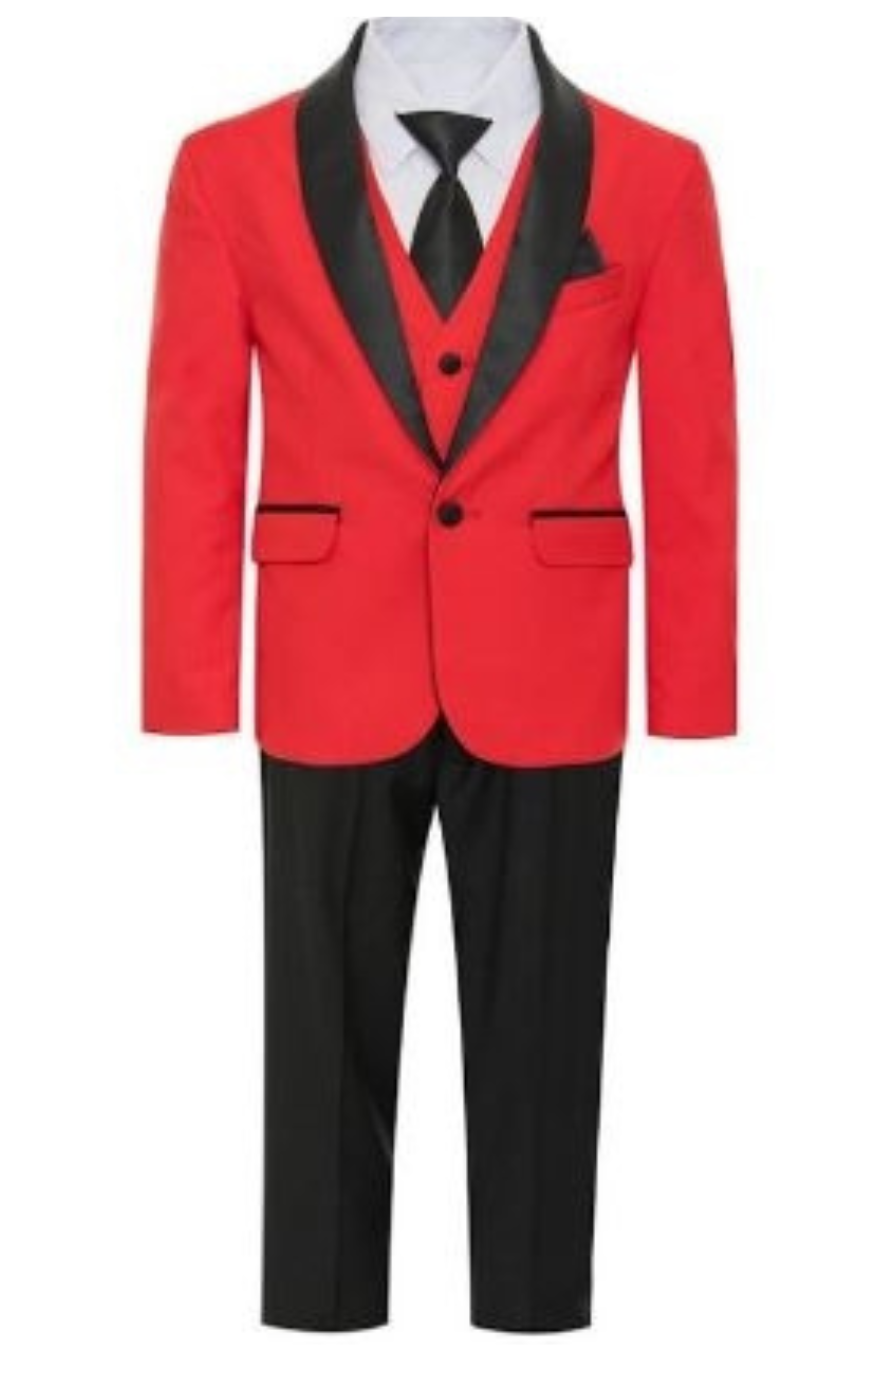 George 5pc Boys Tuxedo: RED (Slim Fit)